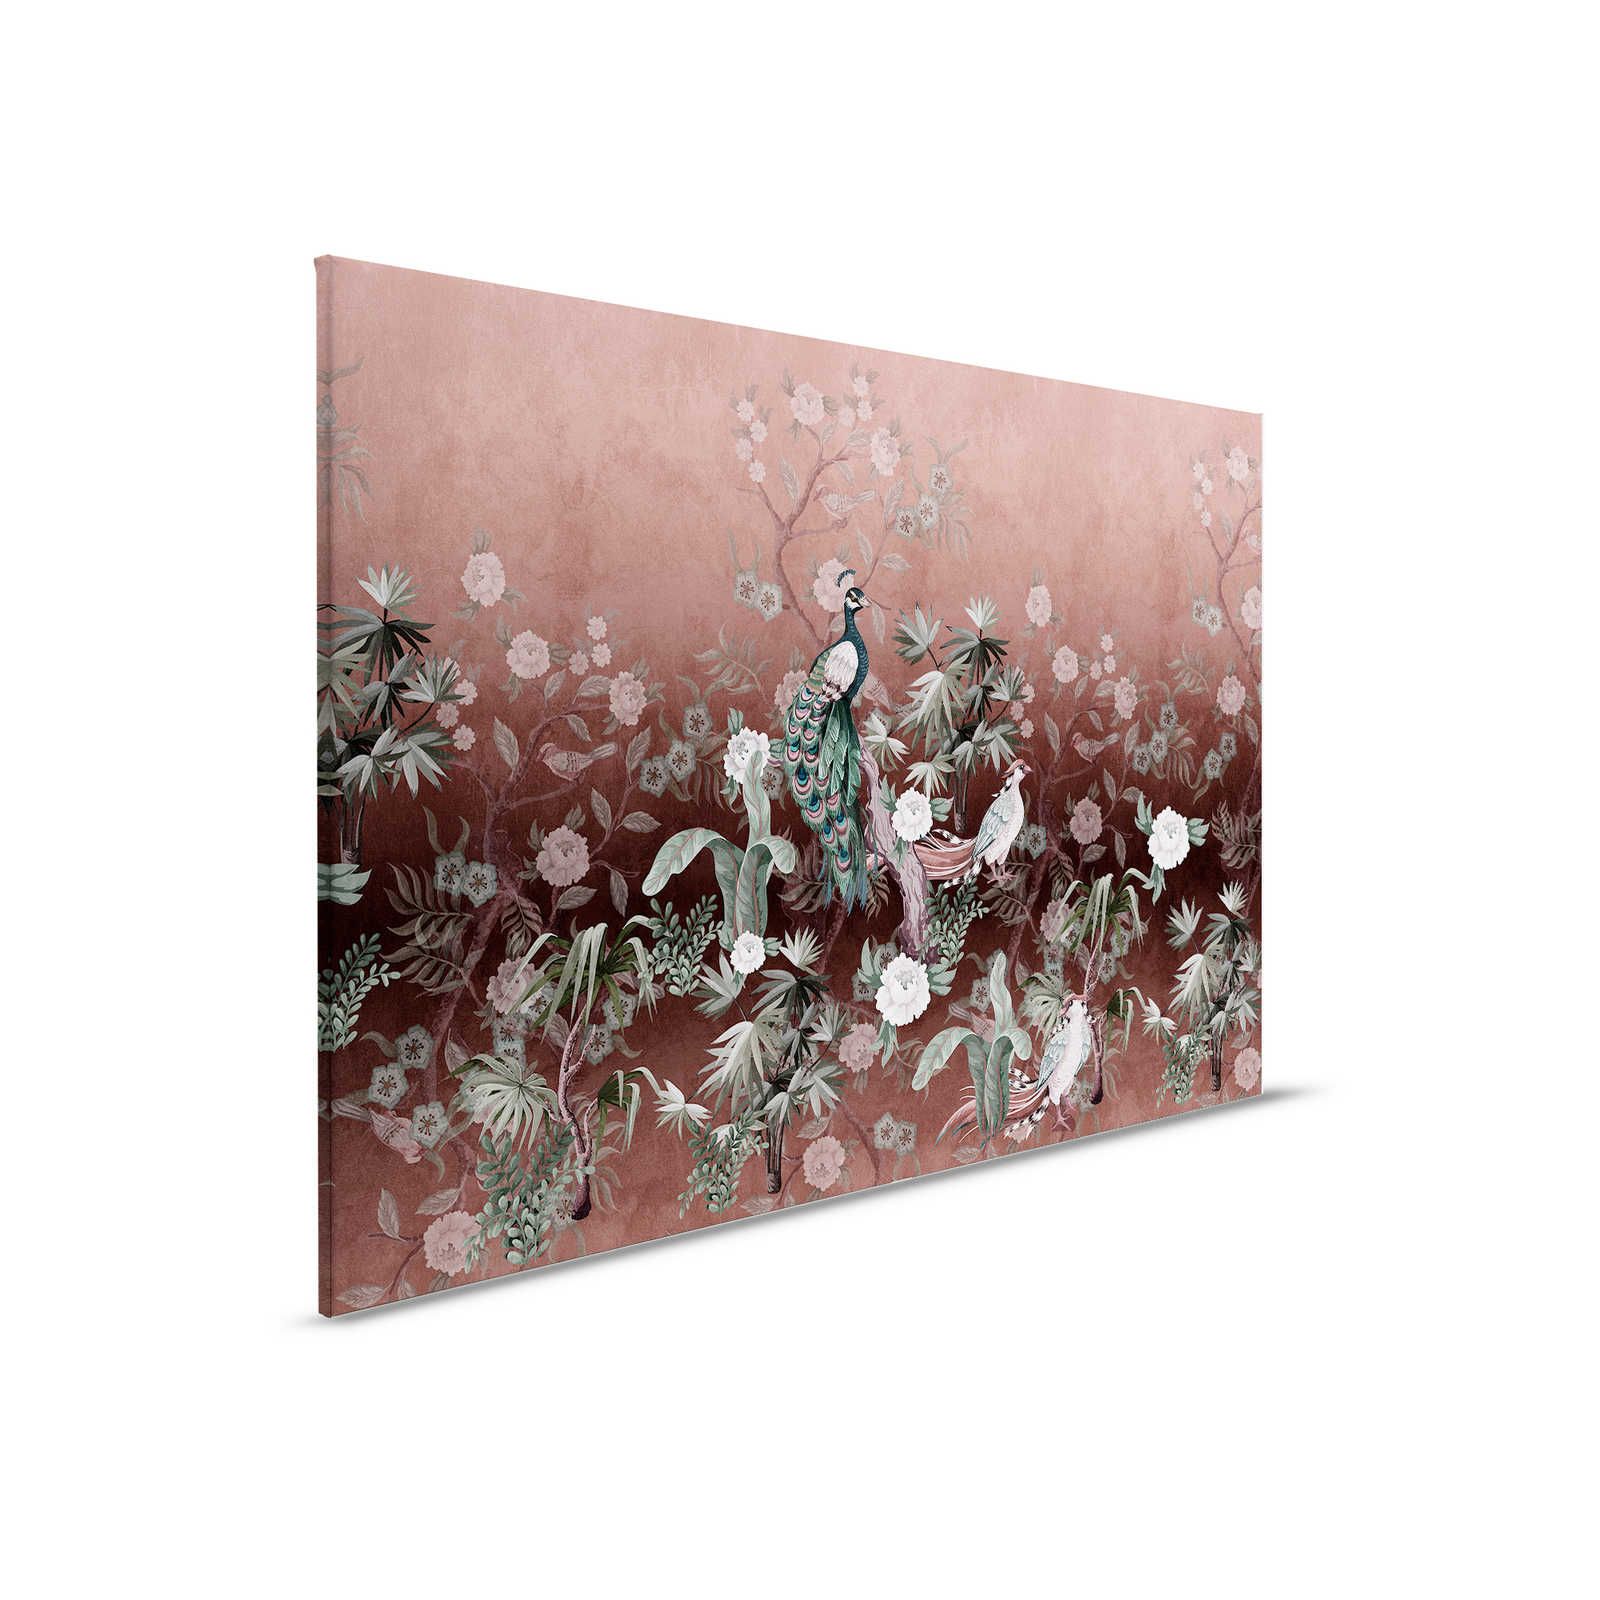 Isola dei pavoni 1 - Quadro su tela Giardino dei pavoni con fiori in rosa antica - 0,90 m x 0,60 m
